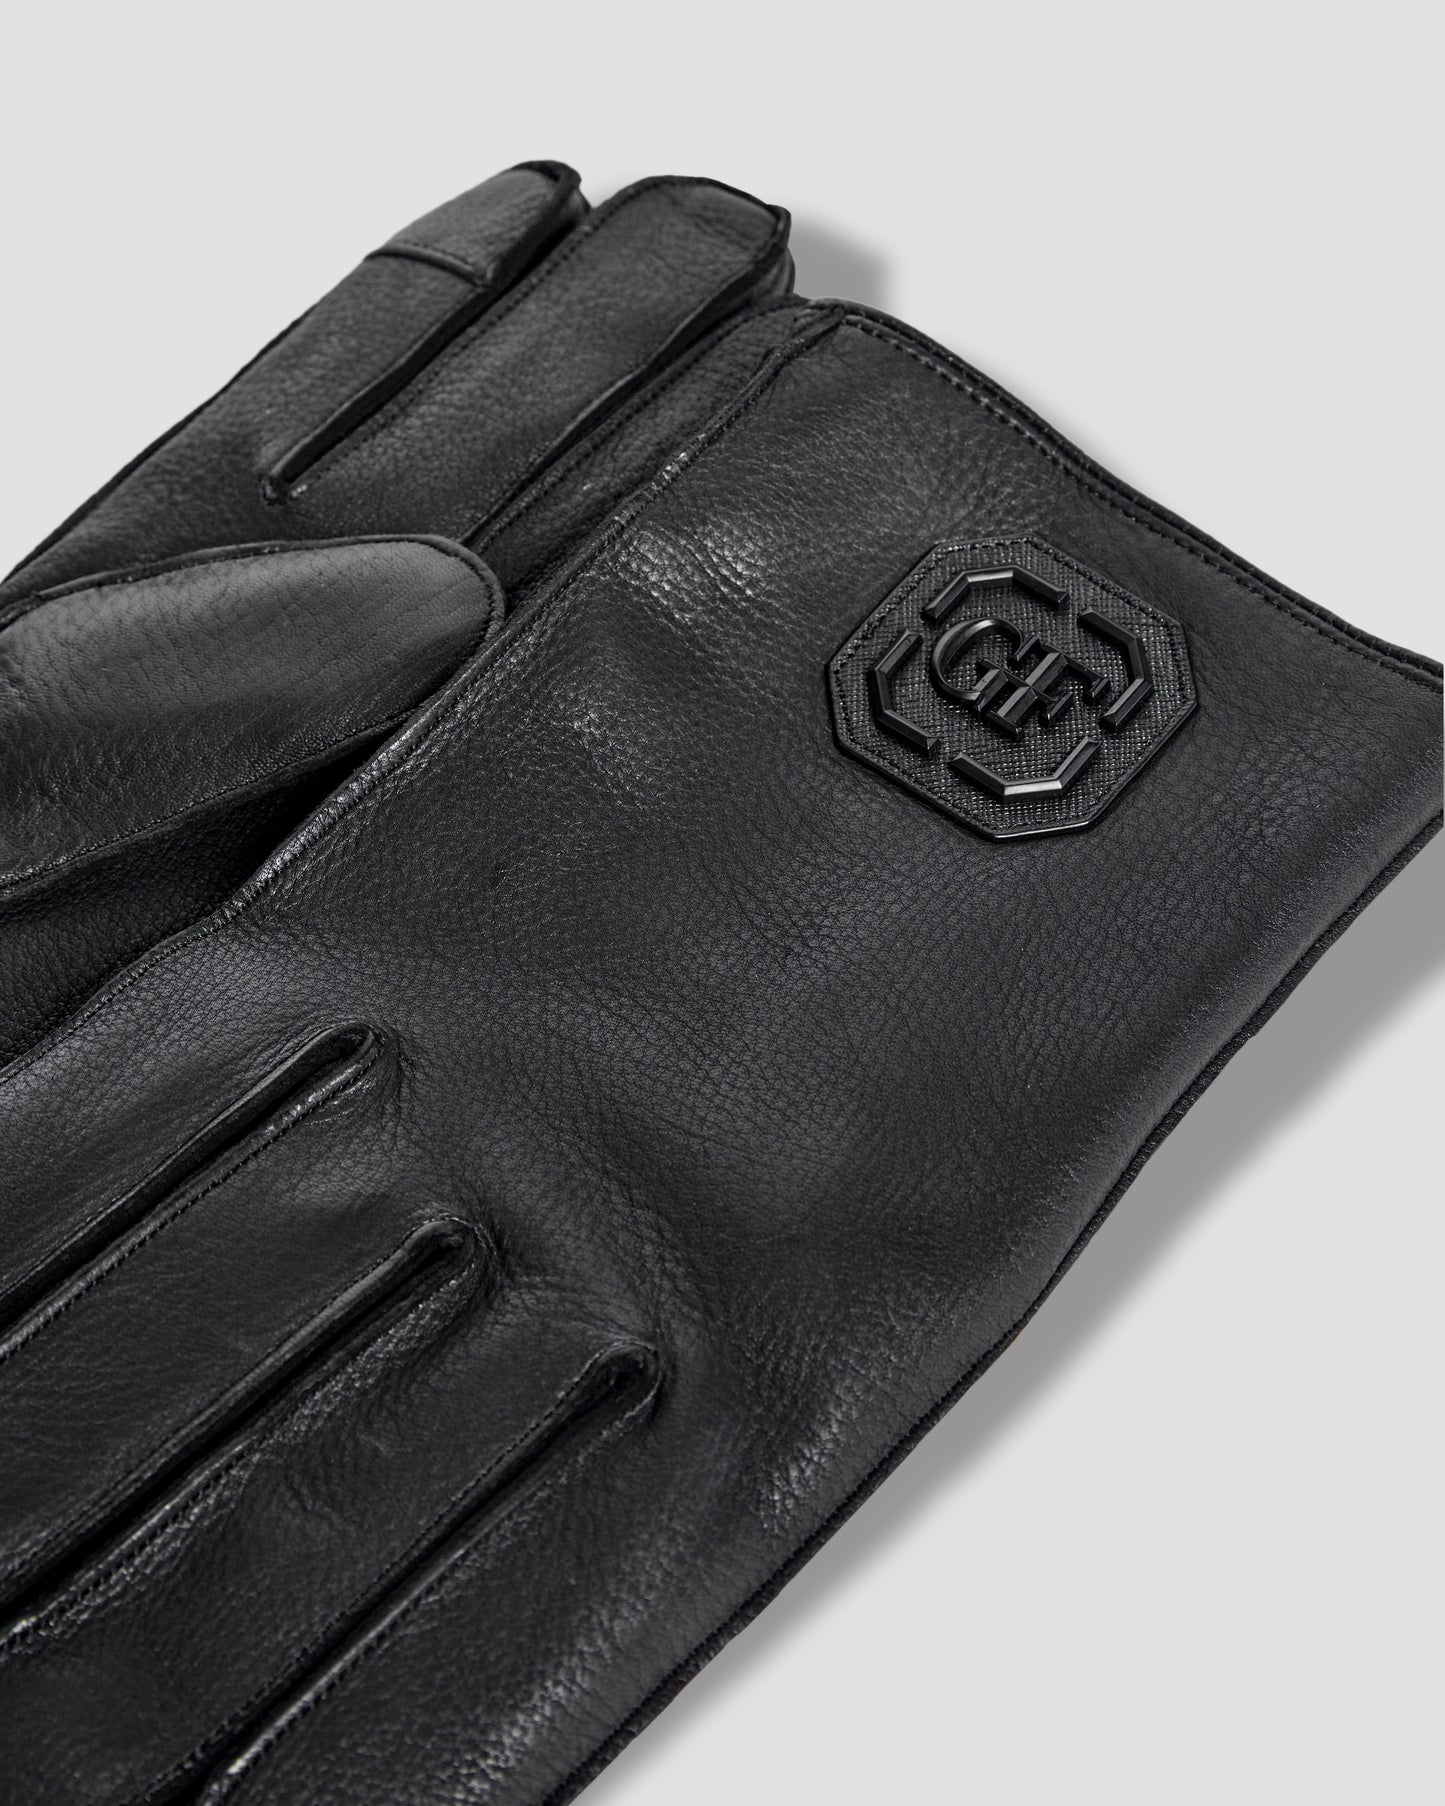 Metal Monogram Leather Gloves